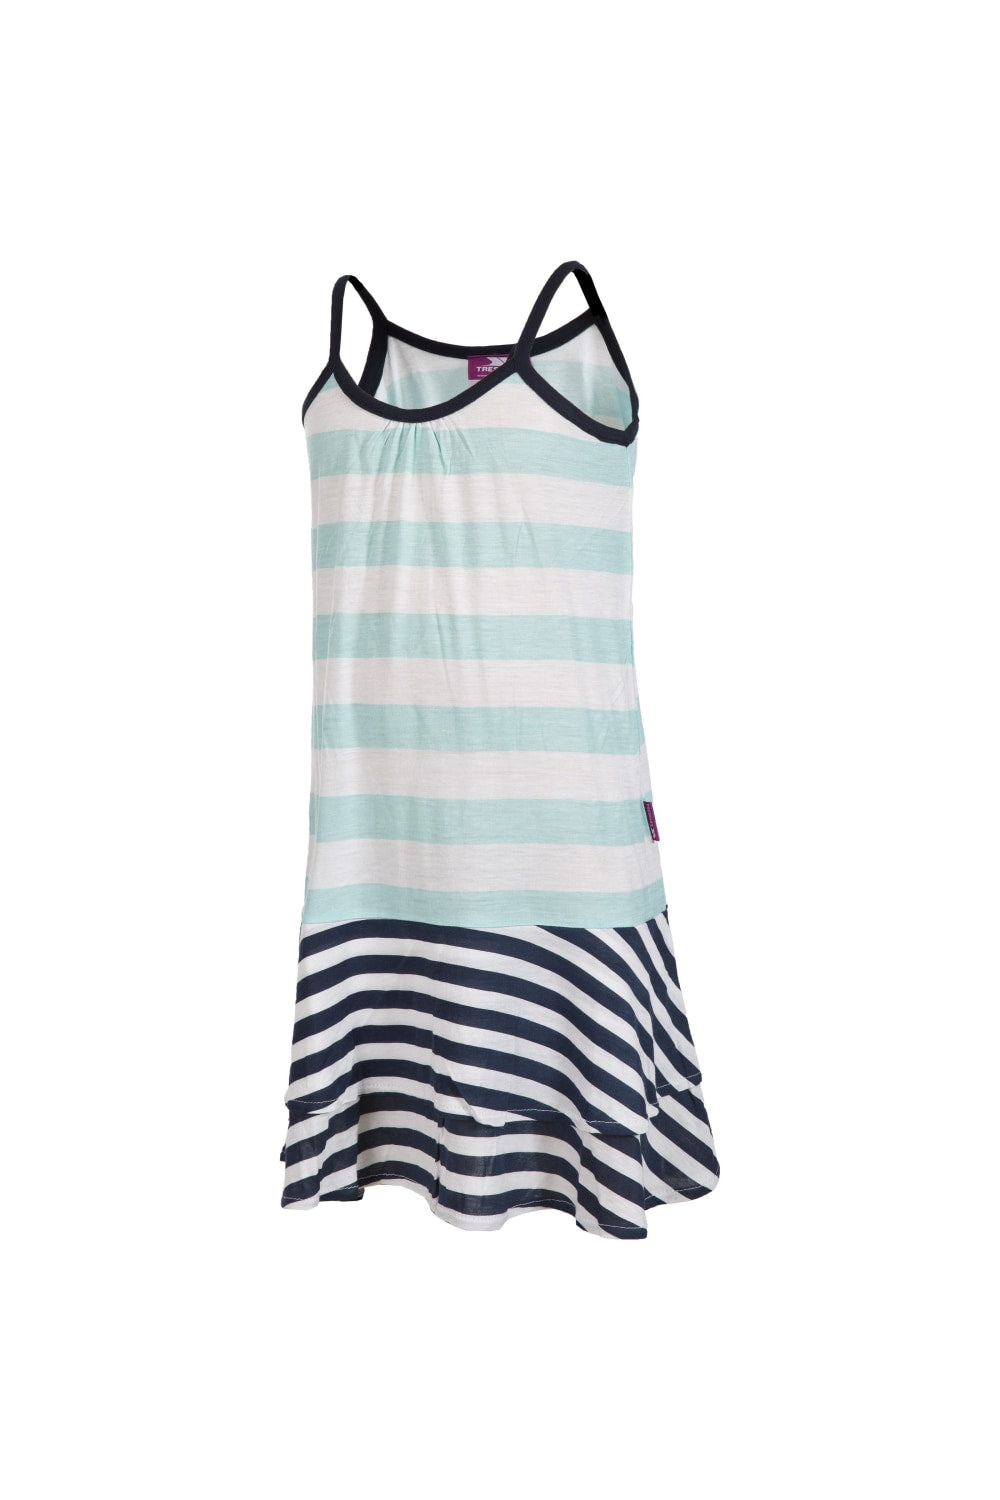 Trespass Childrens Girls Edie Striped Summer Dress (Tropical Stripe)